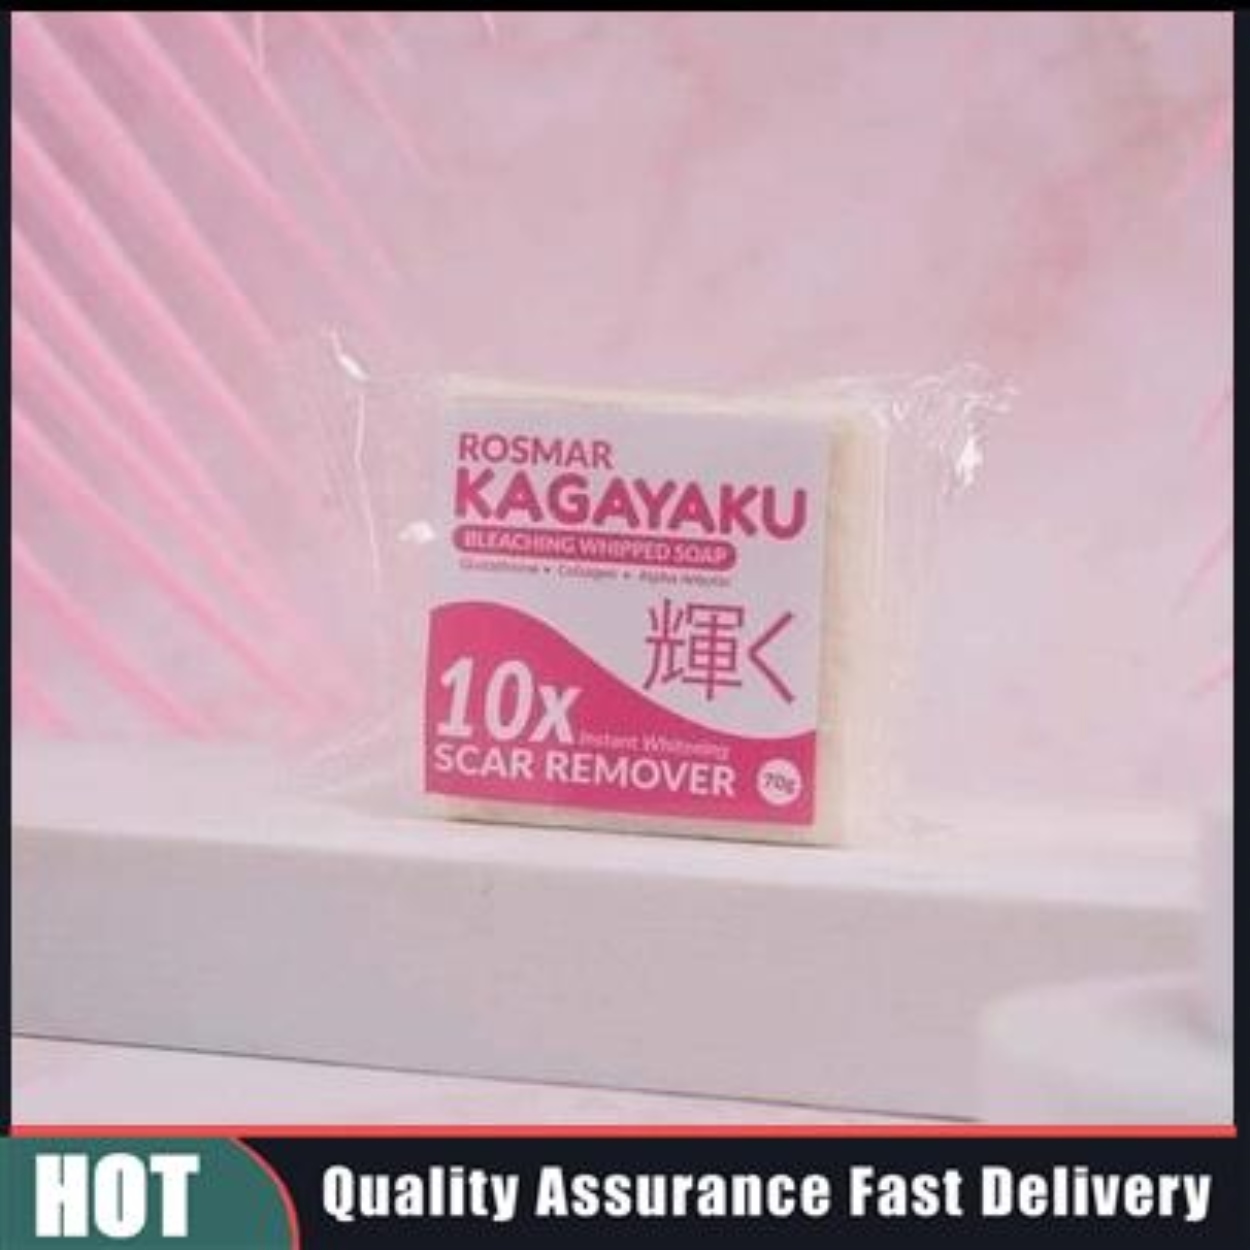 Rosmar Kagayaku 1 BAR Soap Scar Remover 10x Whitening